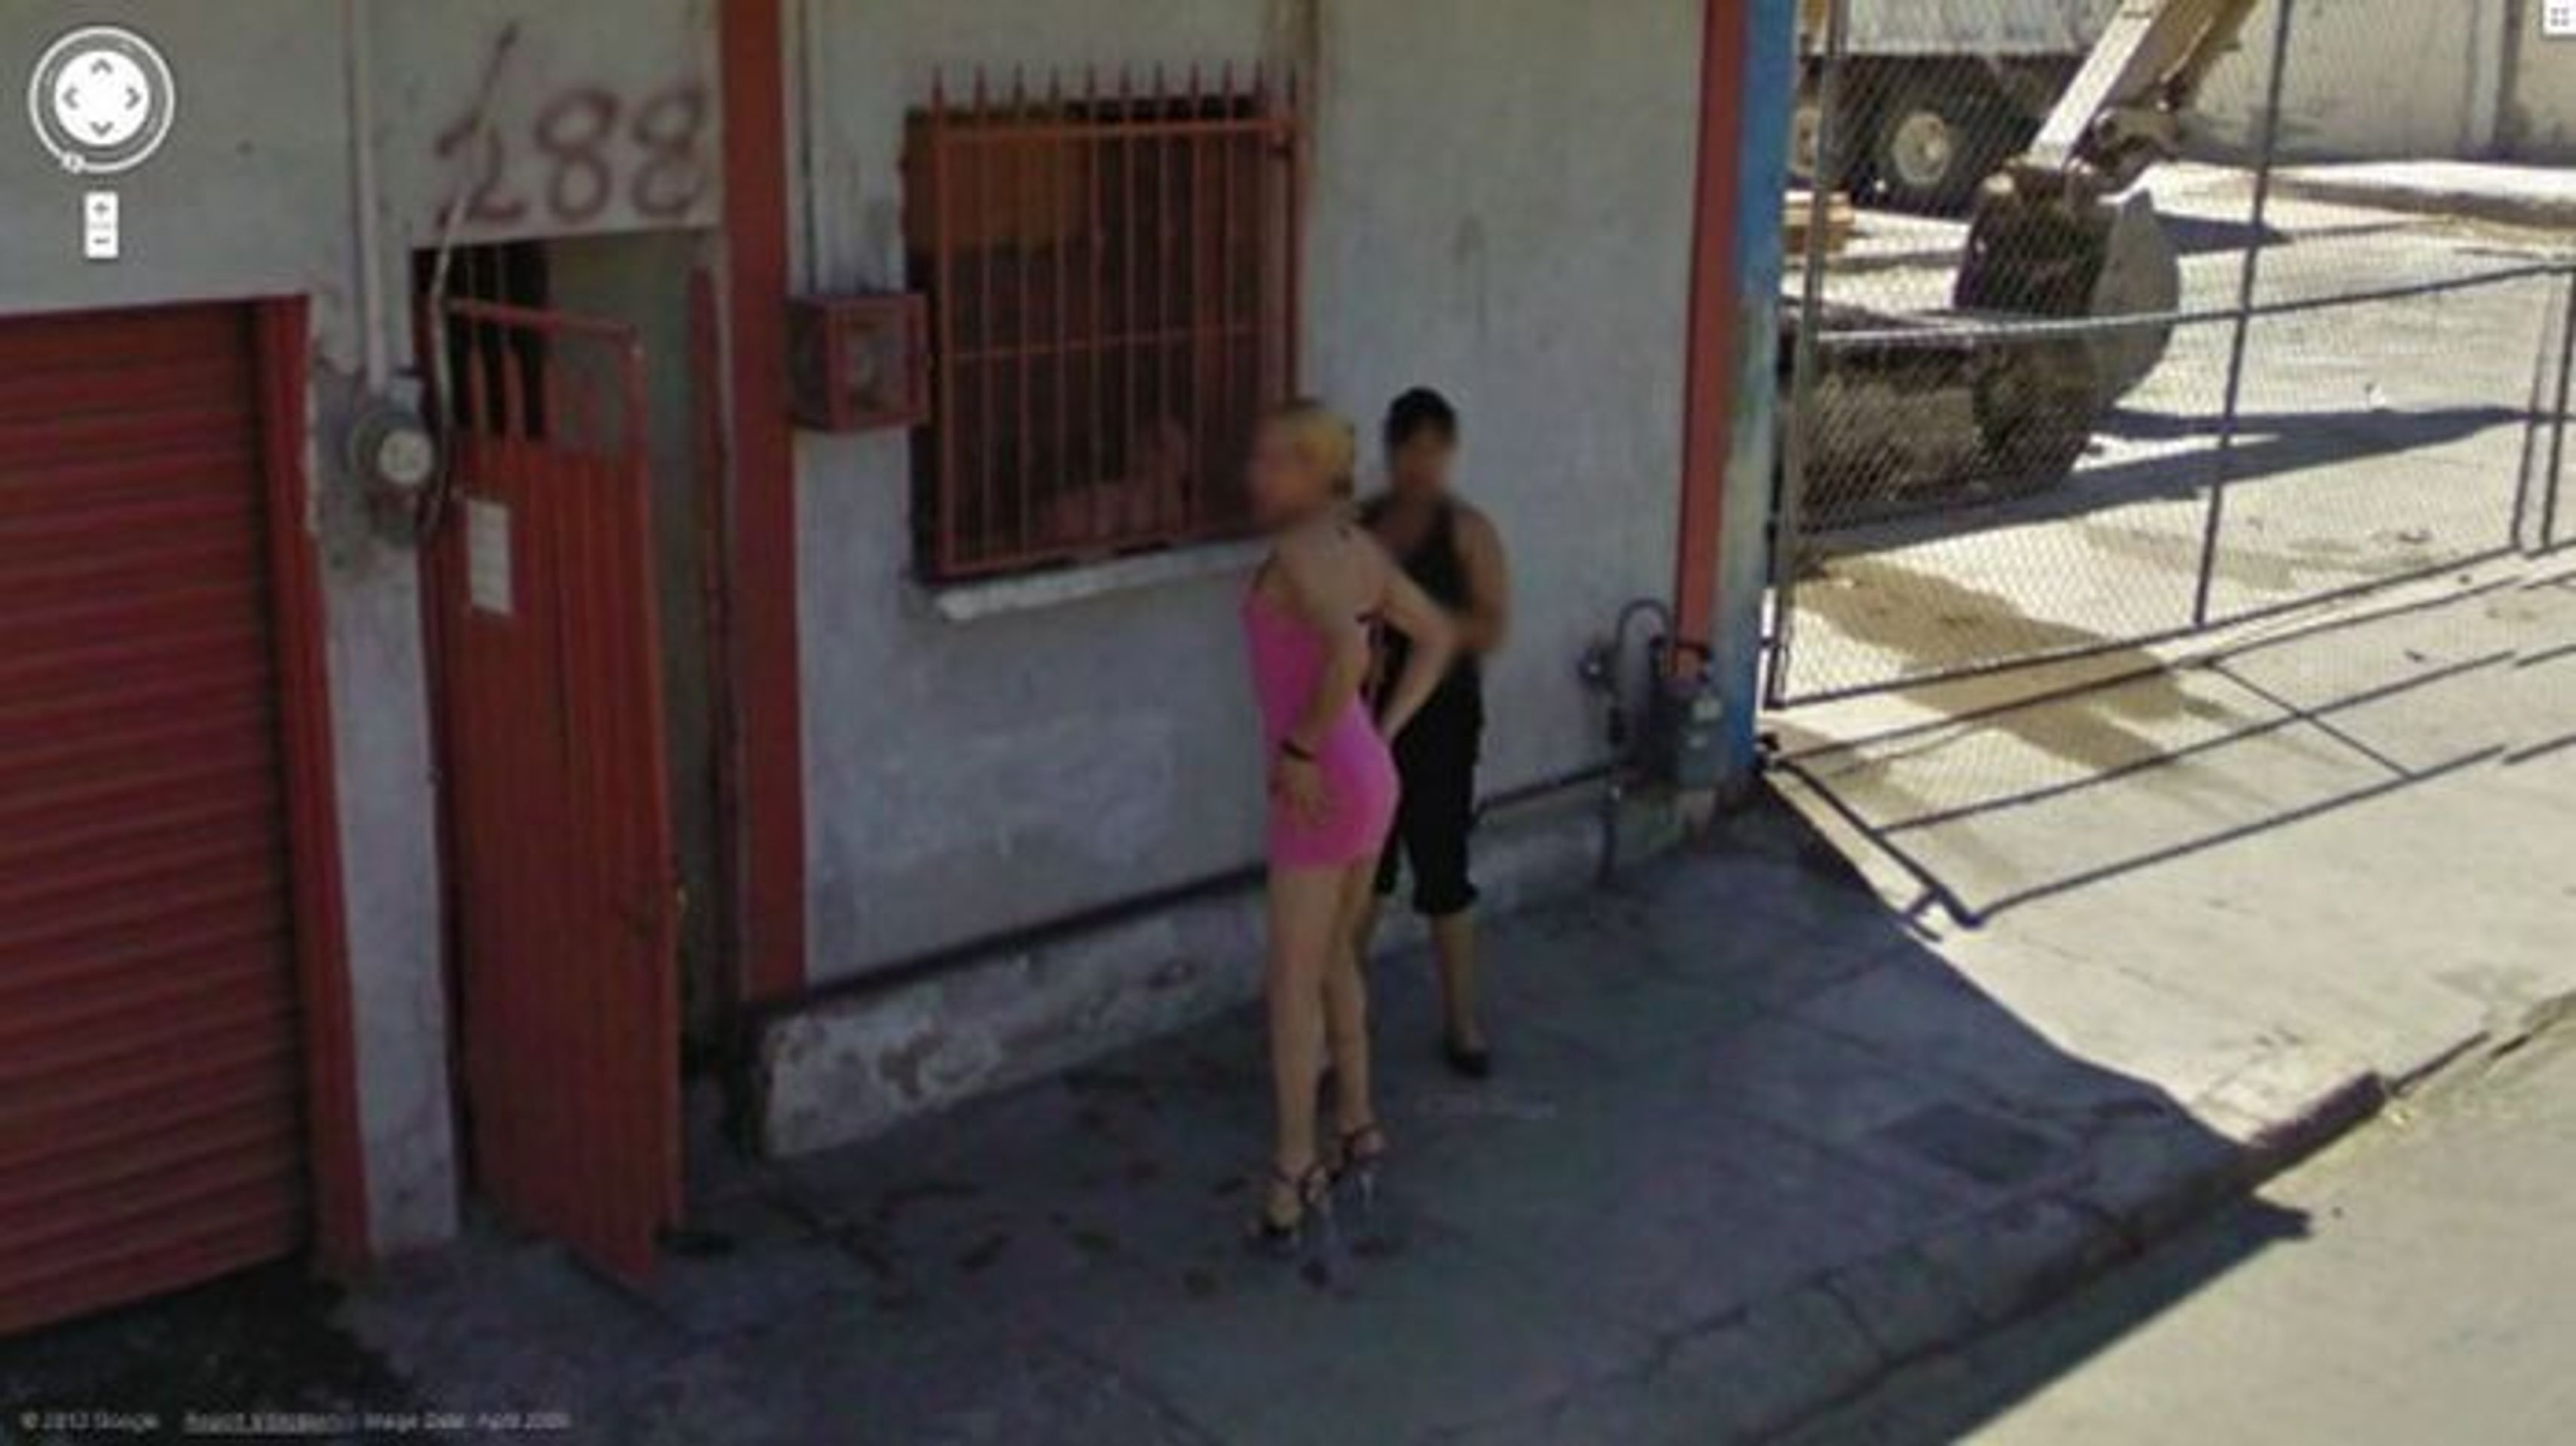 Holky z Google street view - 1 - GALERIE: Holky z Google Street View (1/27)